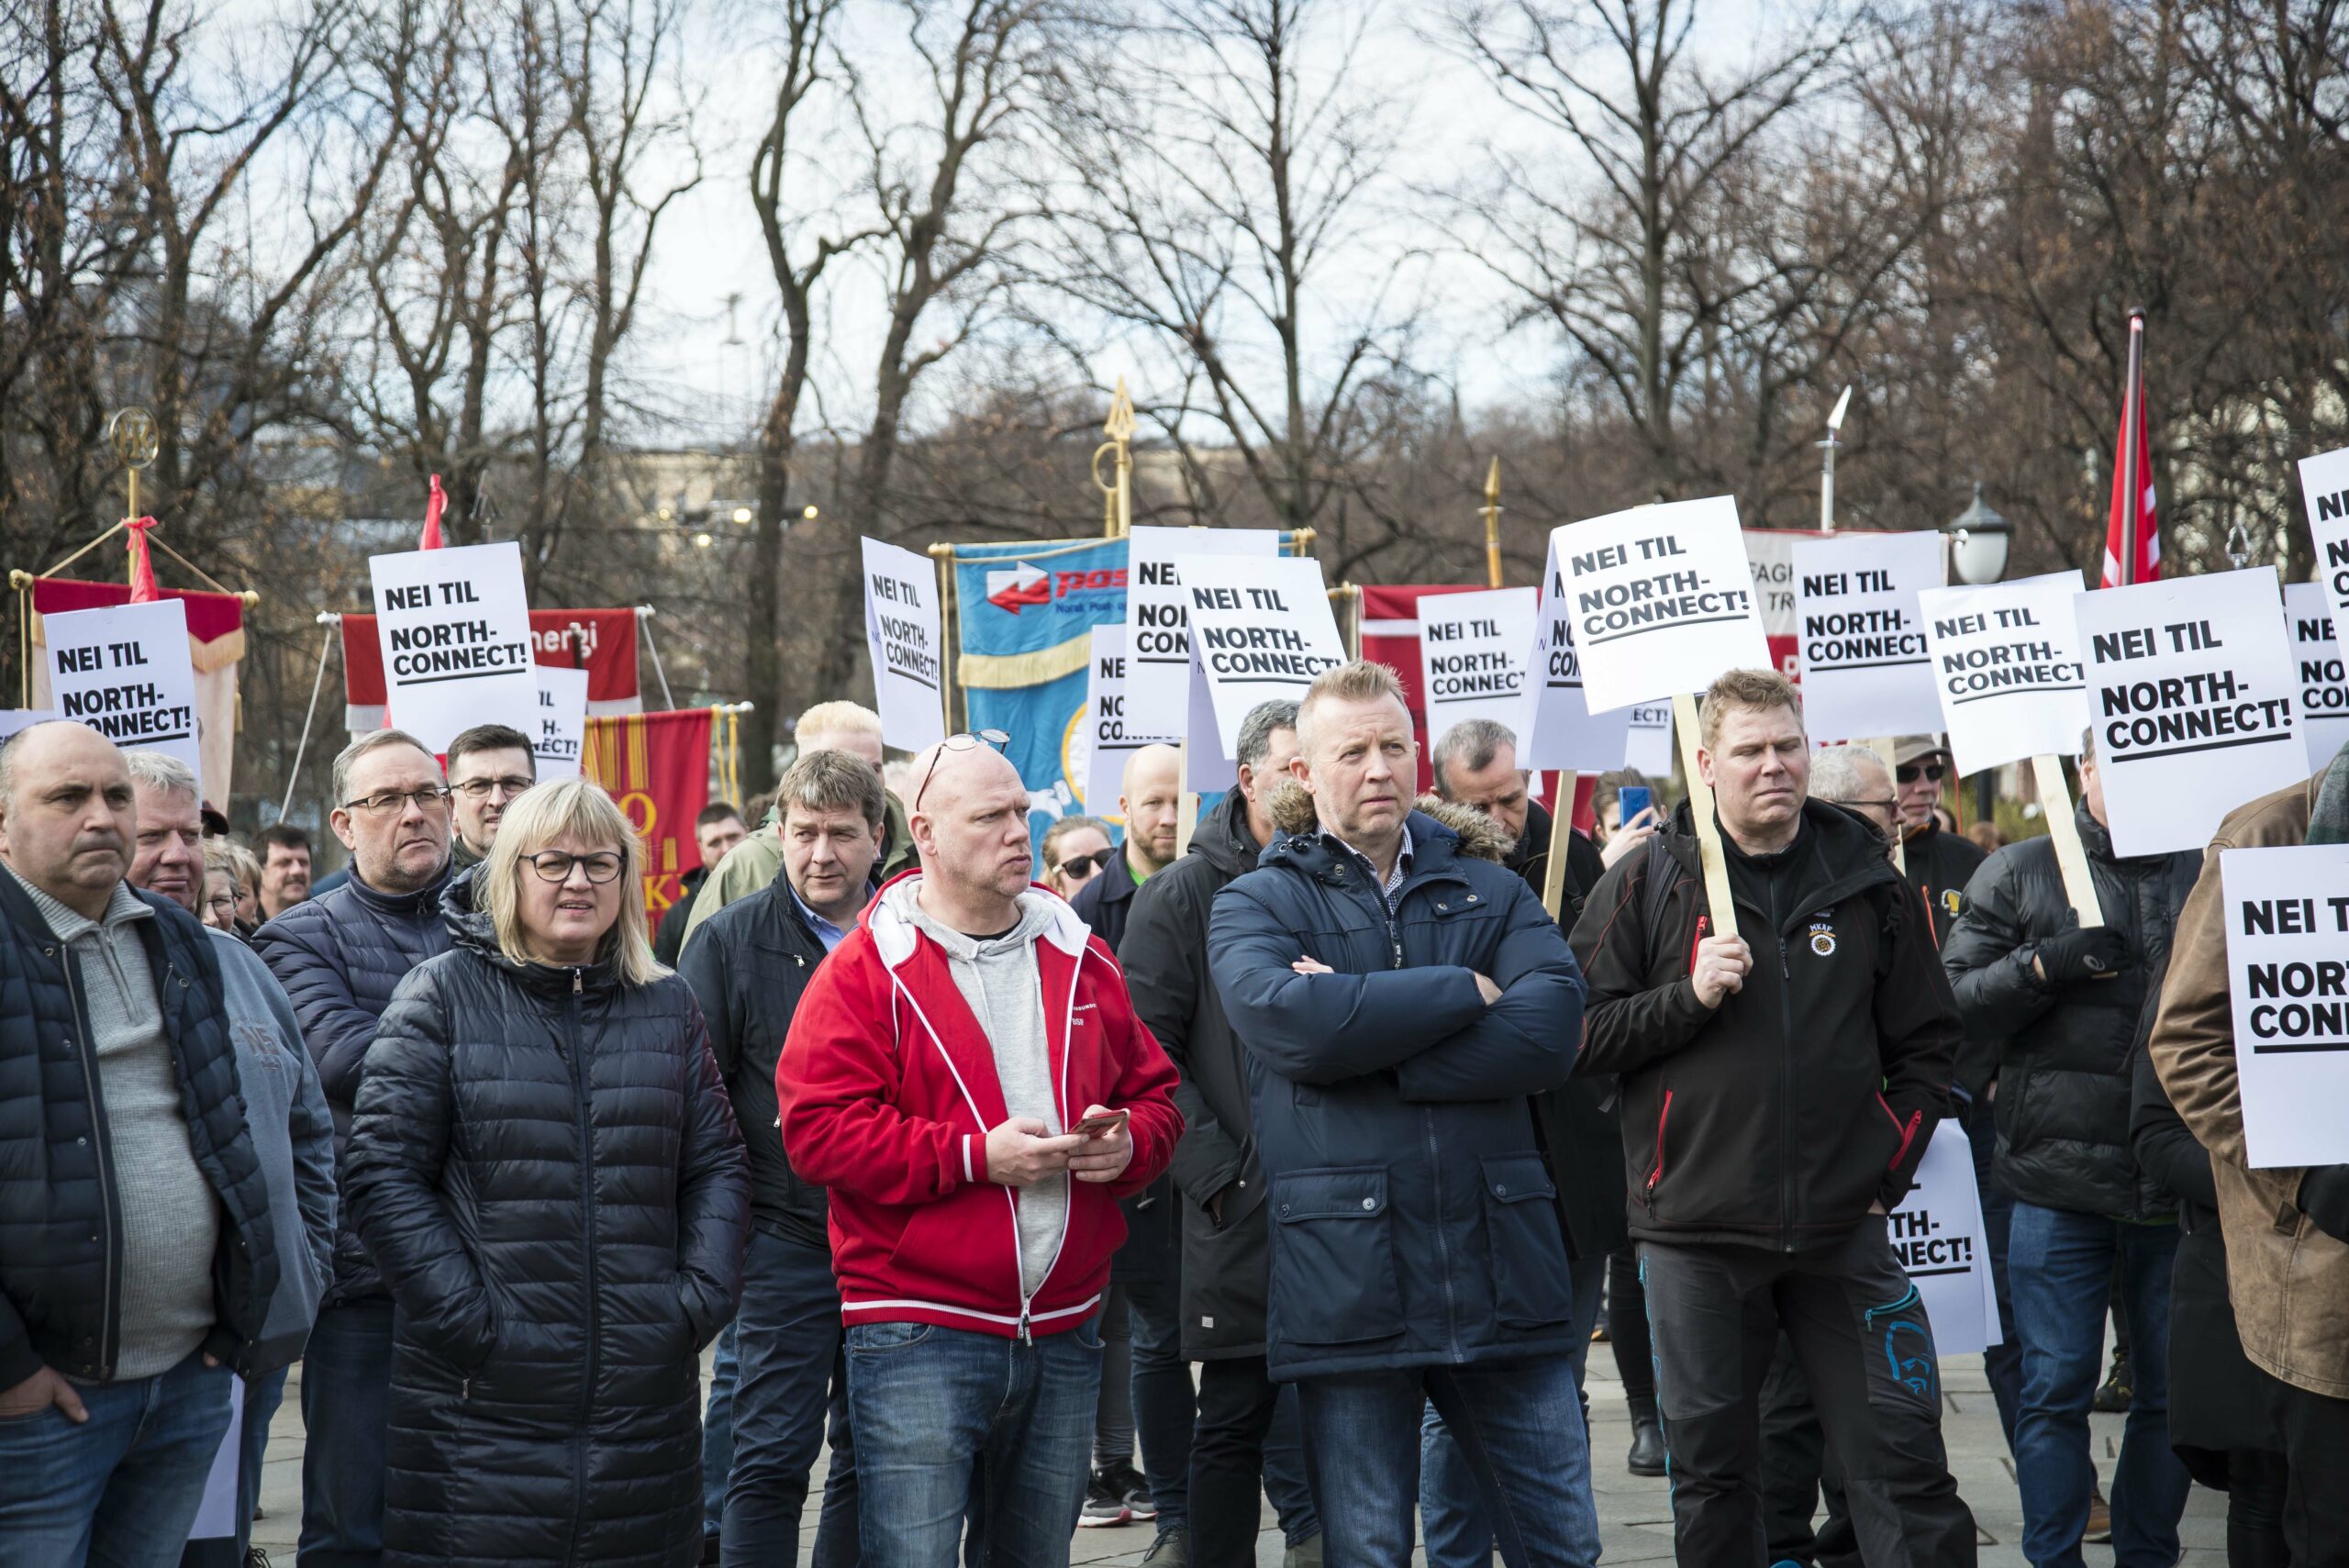 Forbundsleder Frode Alfheim (med armene i kryss) forventer at politikerne holder sine løfter. Foto: Atle Espen Helgesen